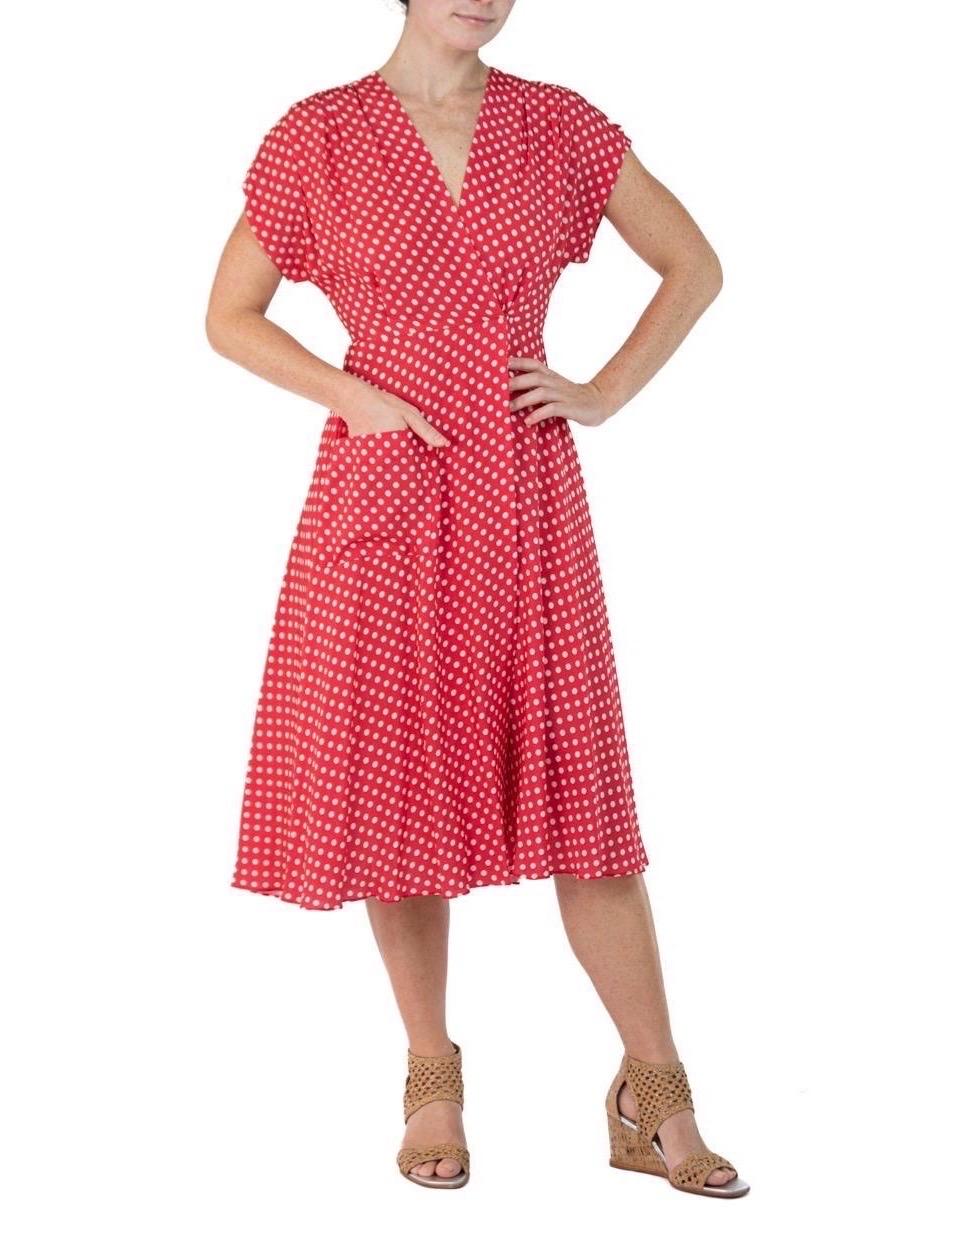 Morphew Collection Red & White Polka Dot Novelty Print Cold Rayon Bias Dress Ma For Sale 2